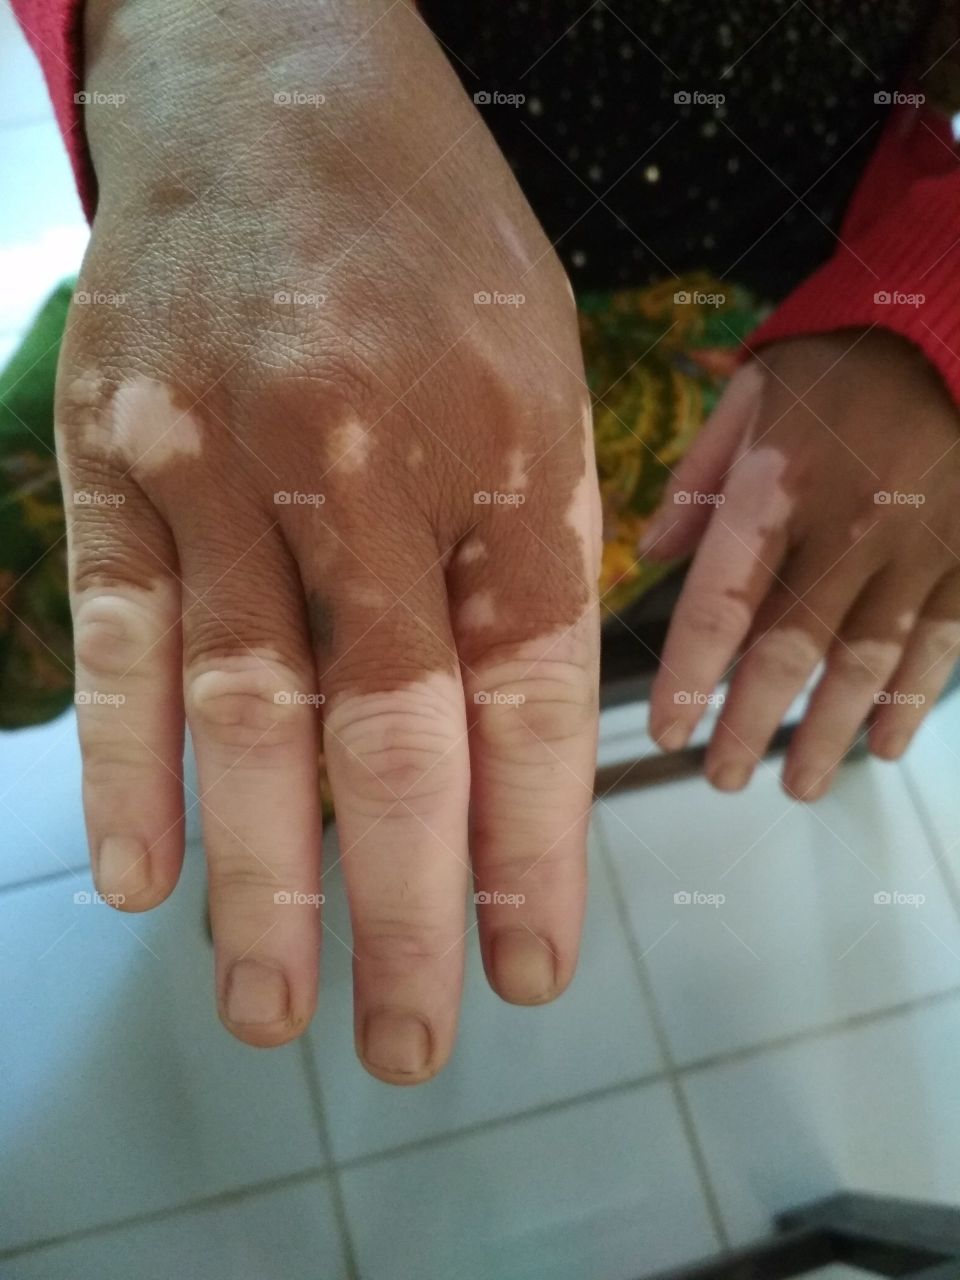 The sick hand